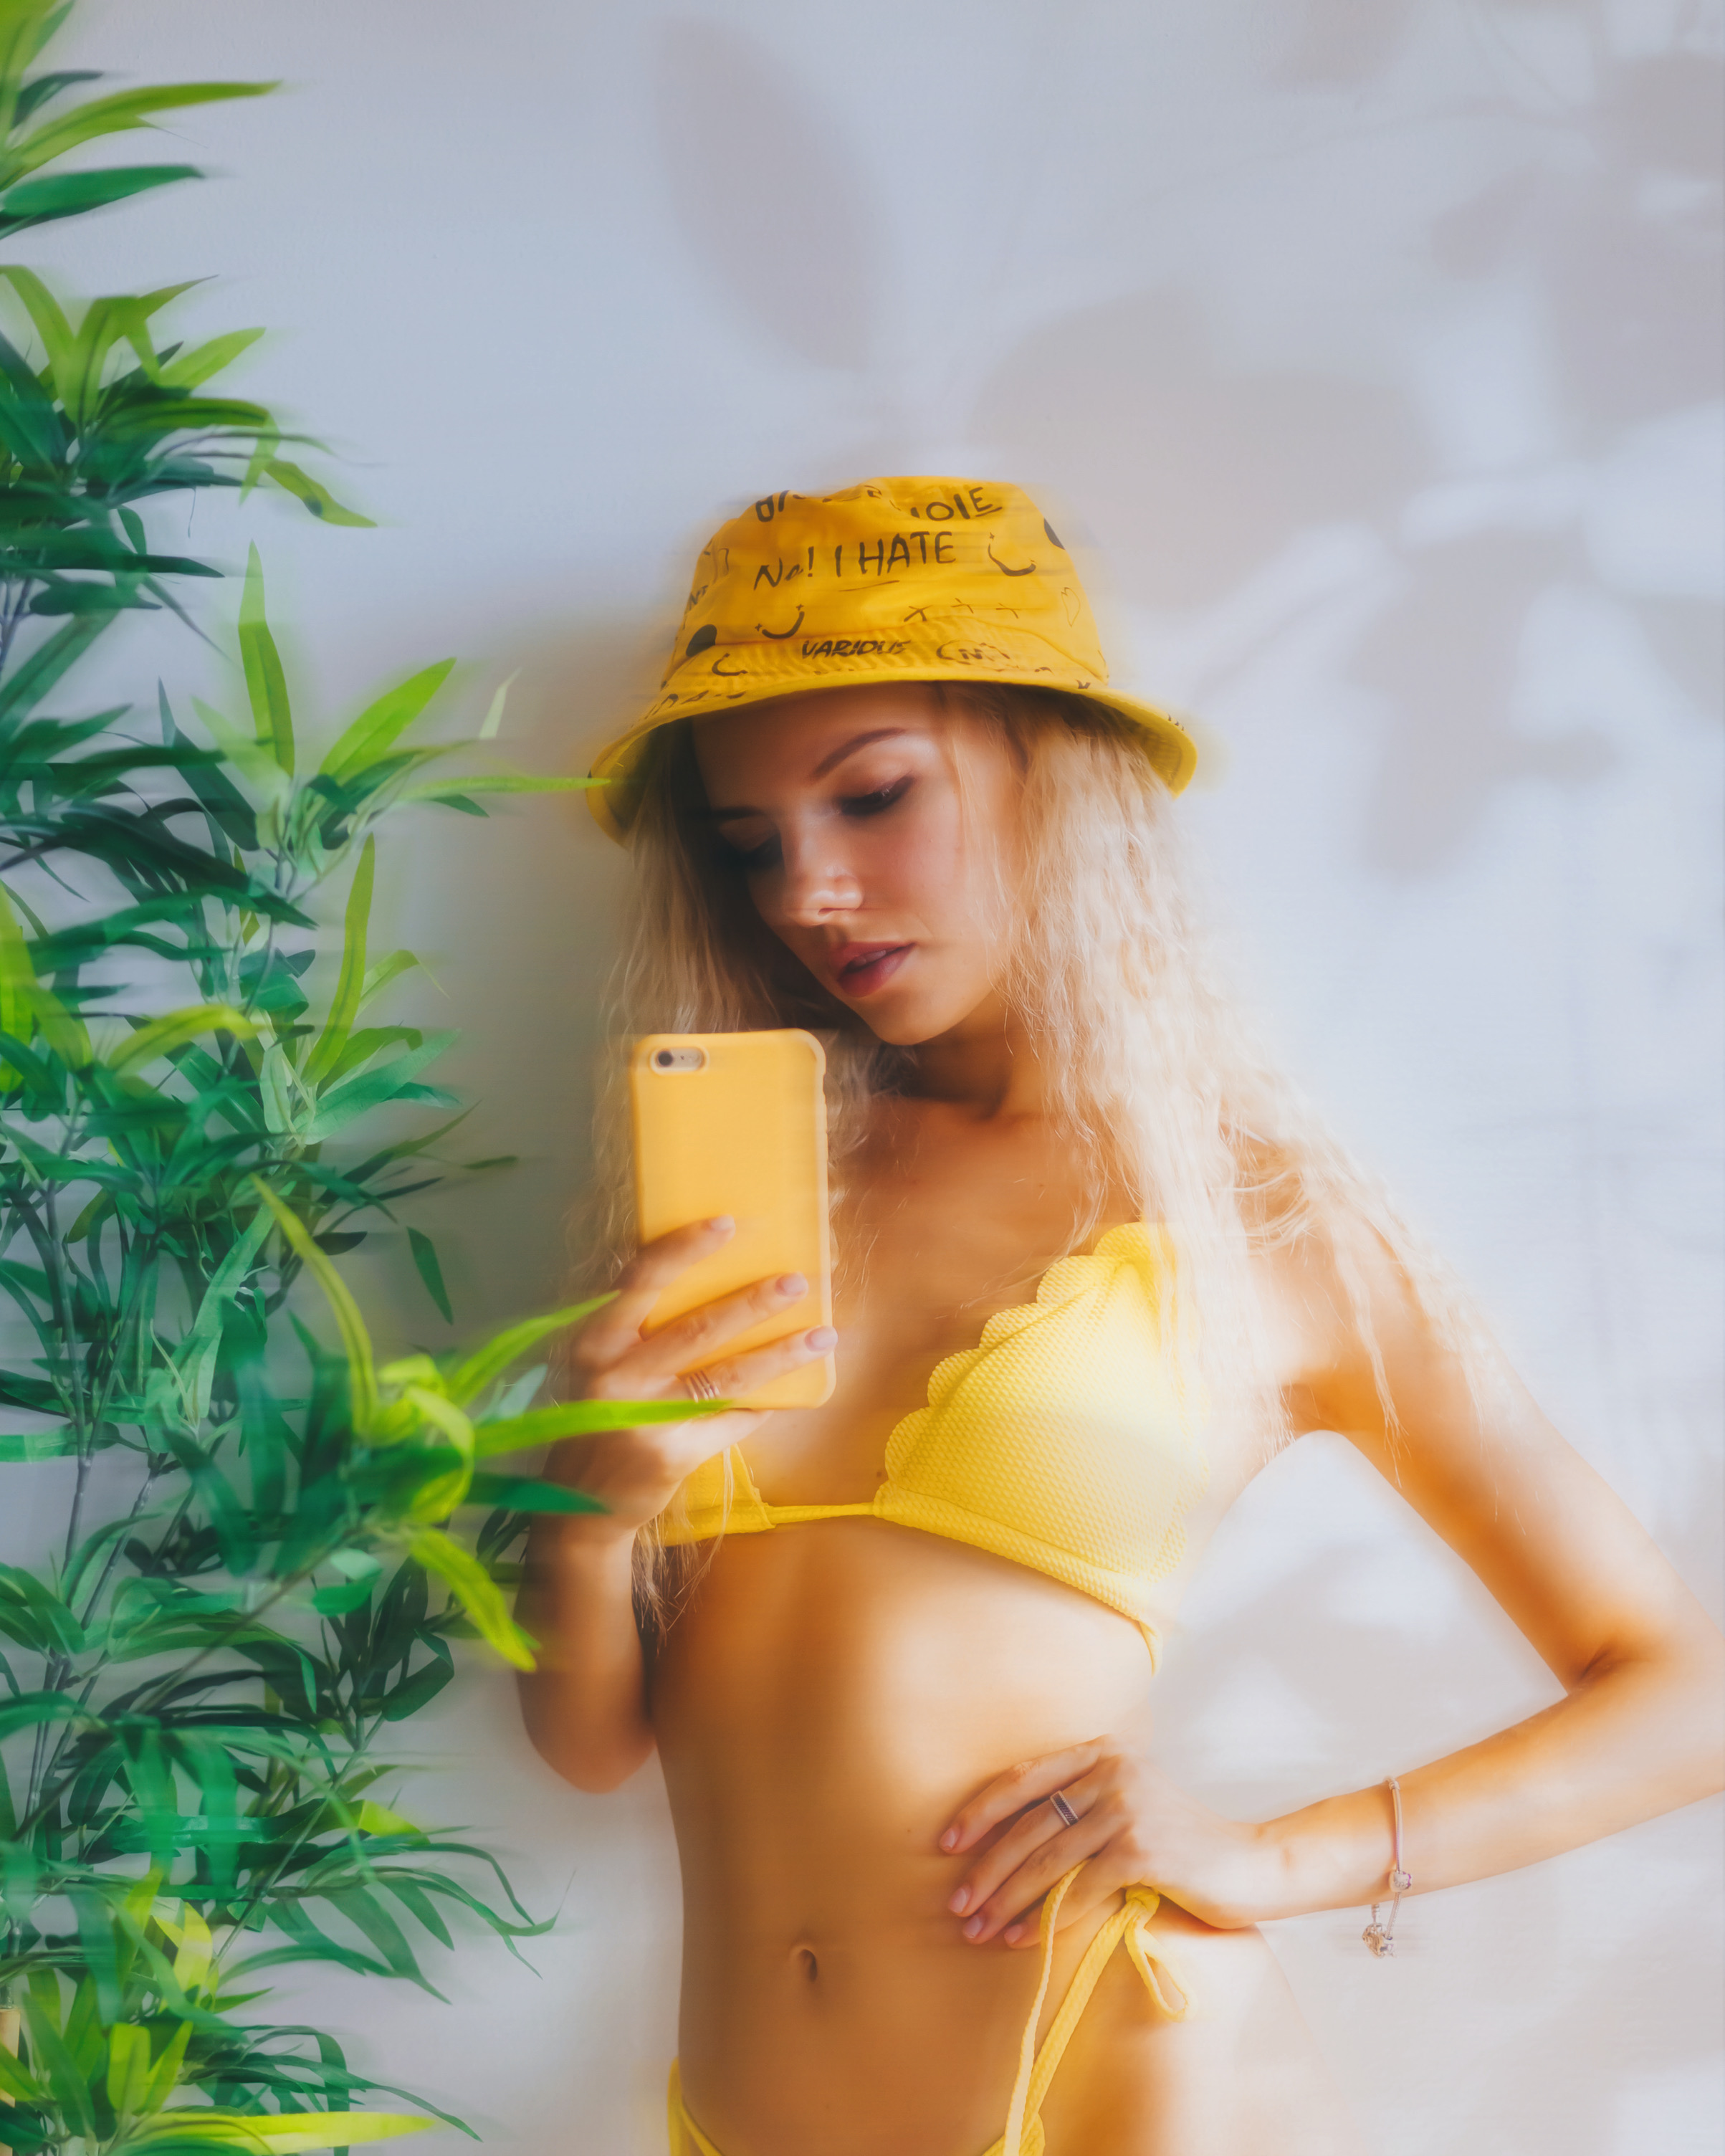 #coconutgirl #summer #blur #blurryedit #blureffect #selfie #motion blur #mask #mask 